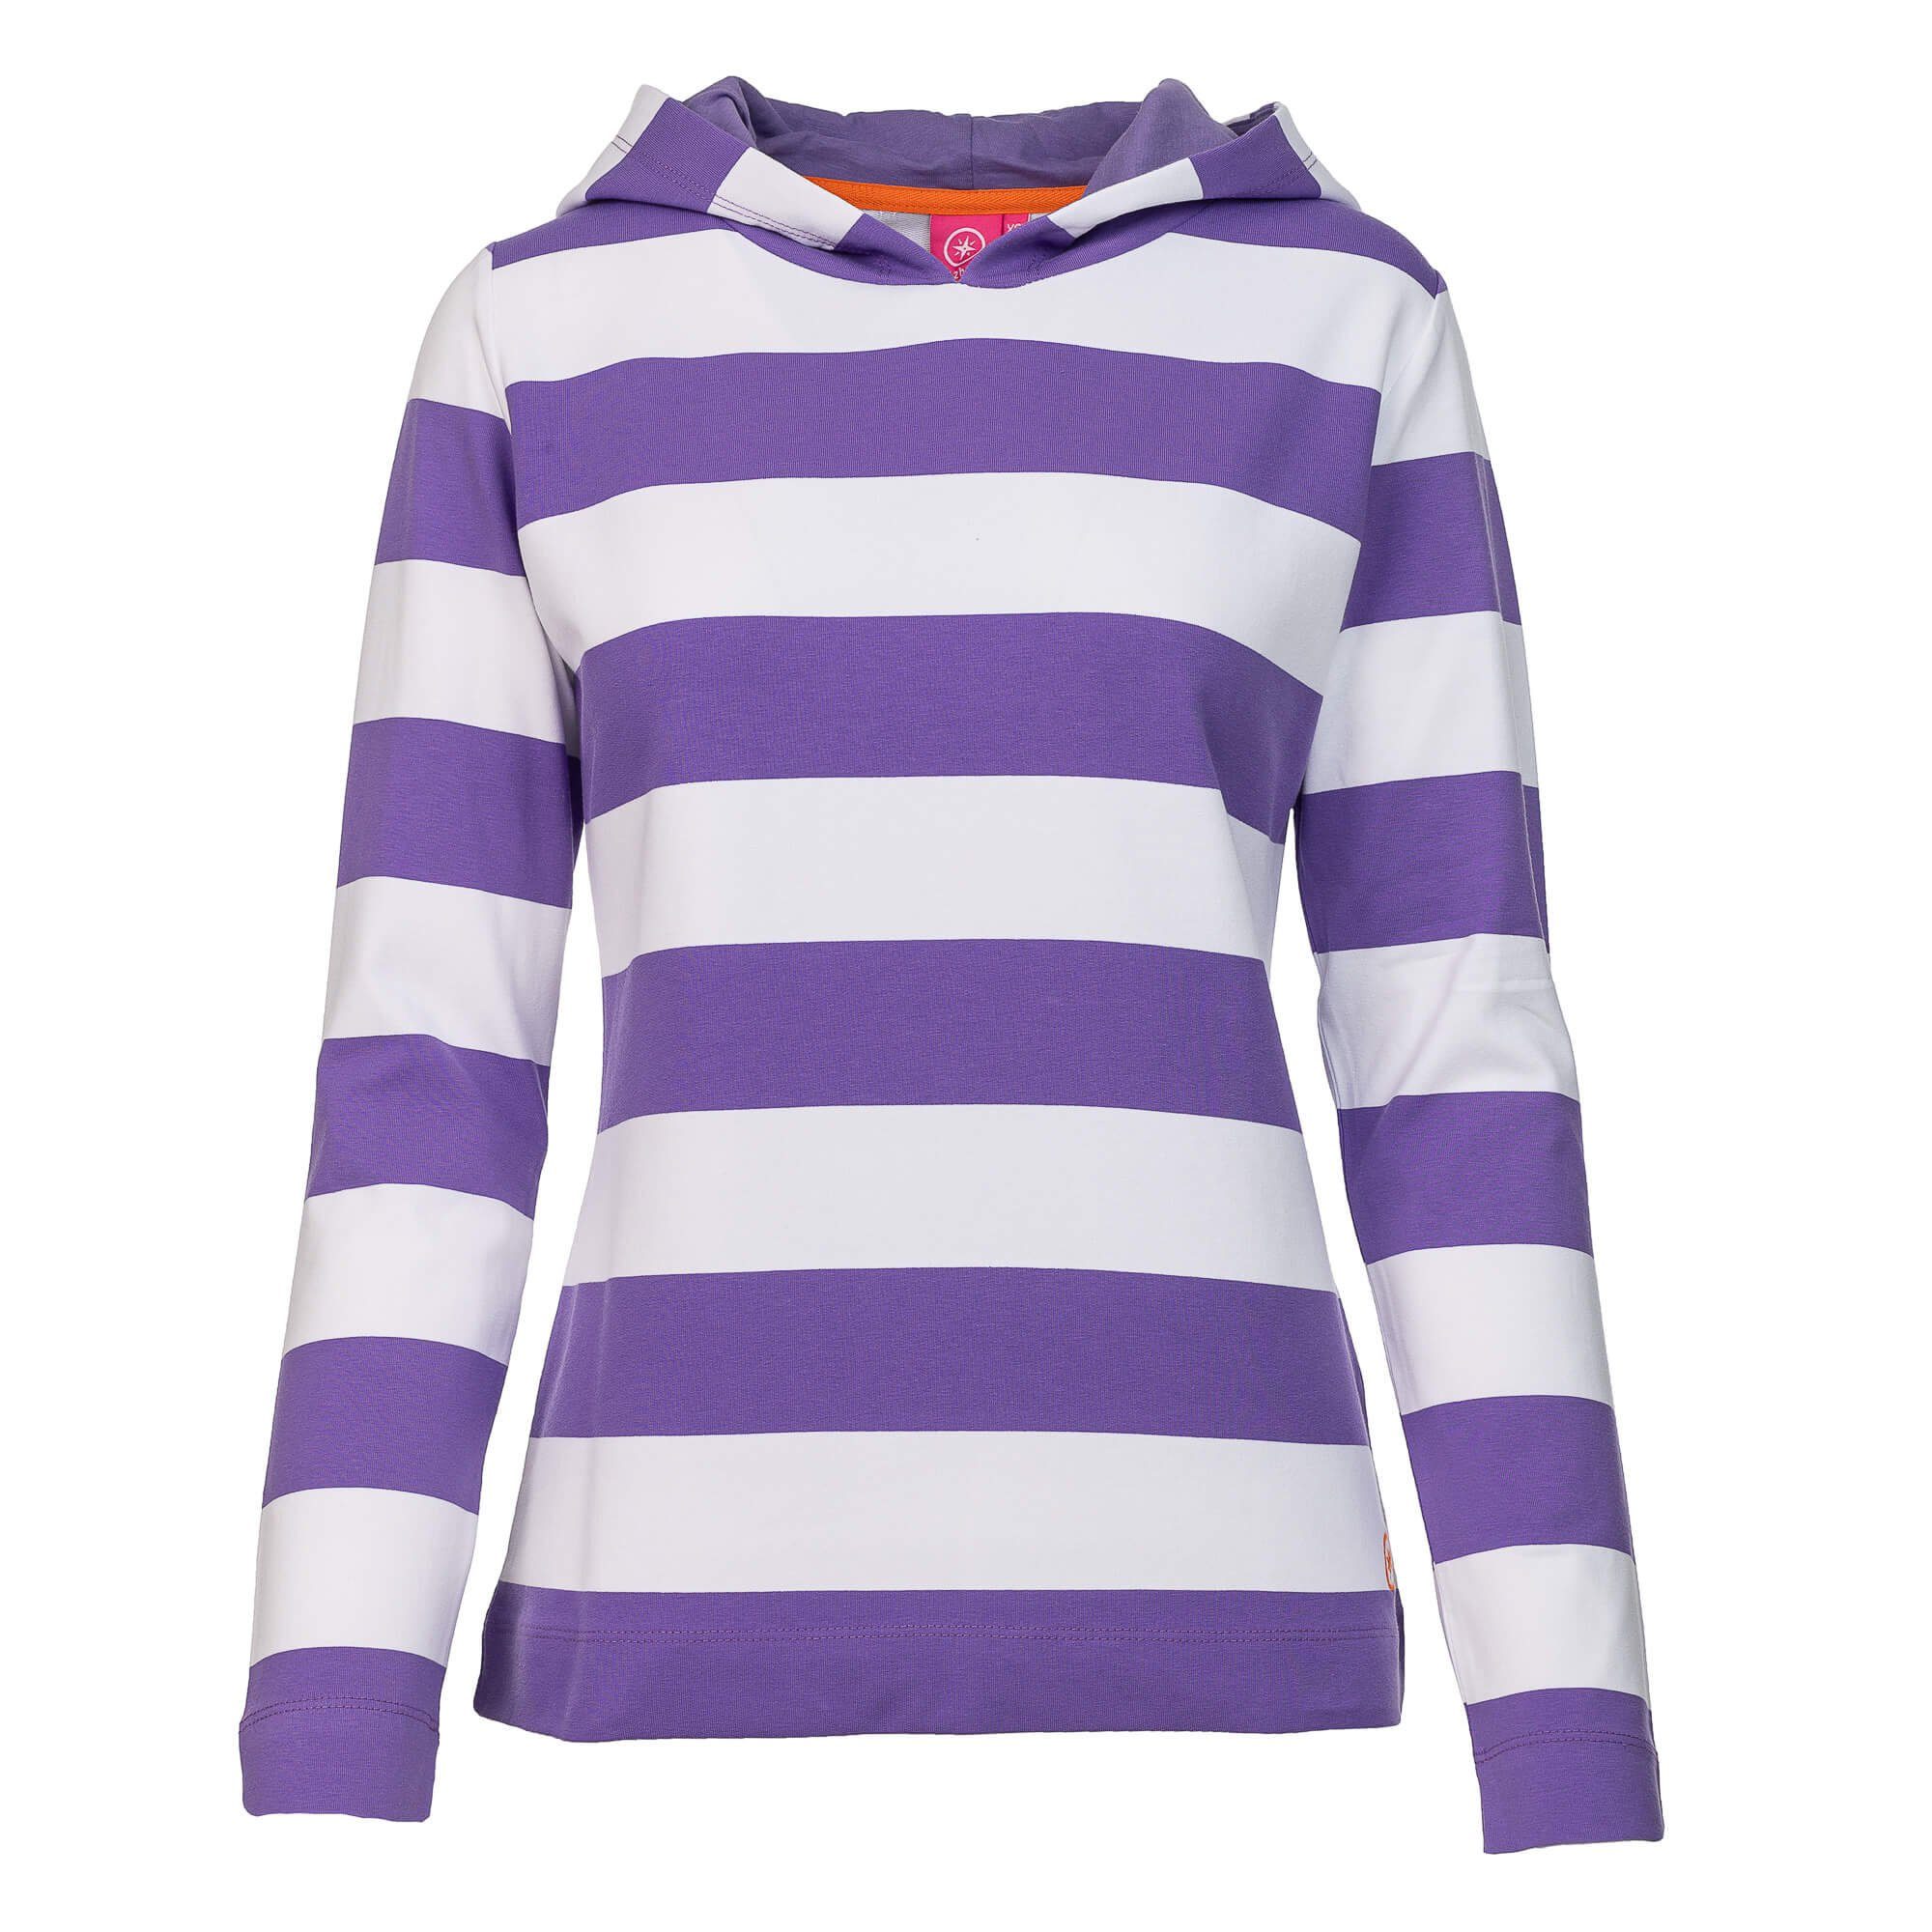 Damen salzhaut Hakana Kapuzenshirt Colourblock-Streifen purple-white - Kapuzen Shirt Streifenshirt Hoodie